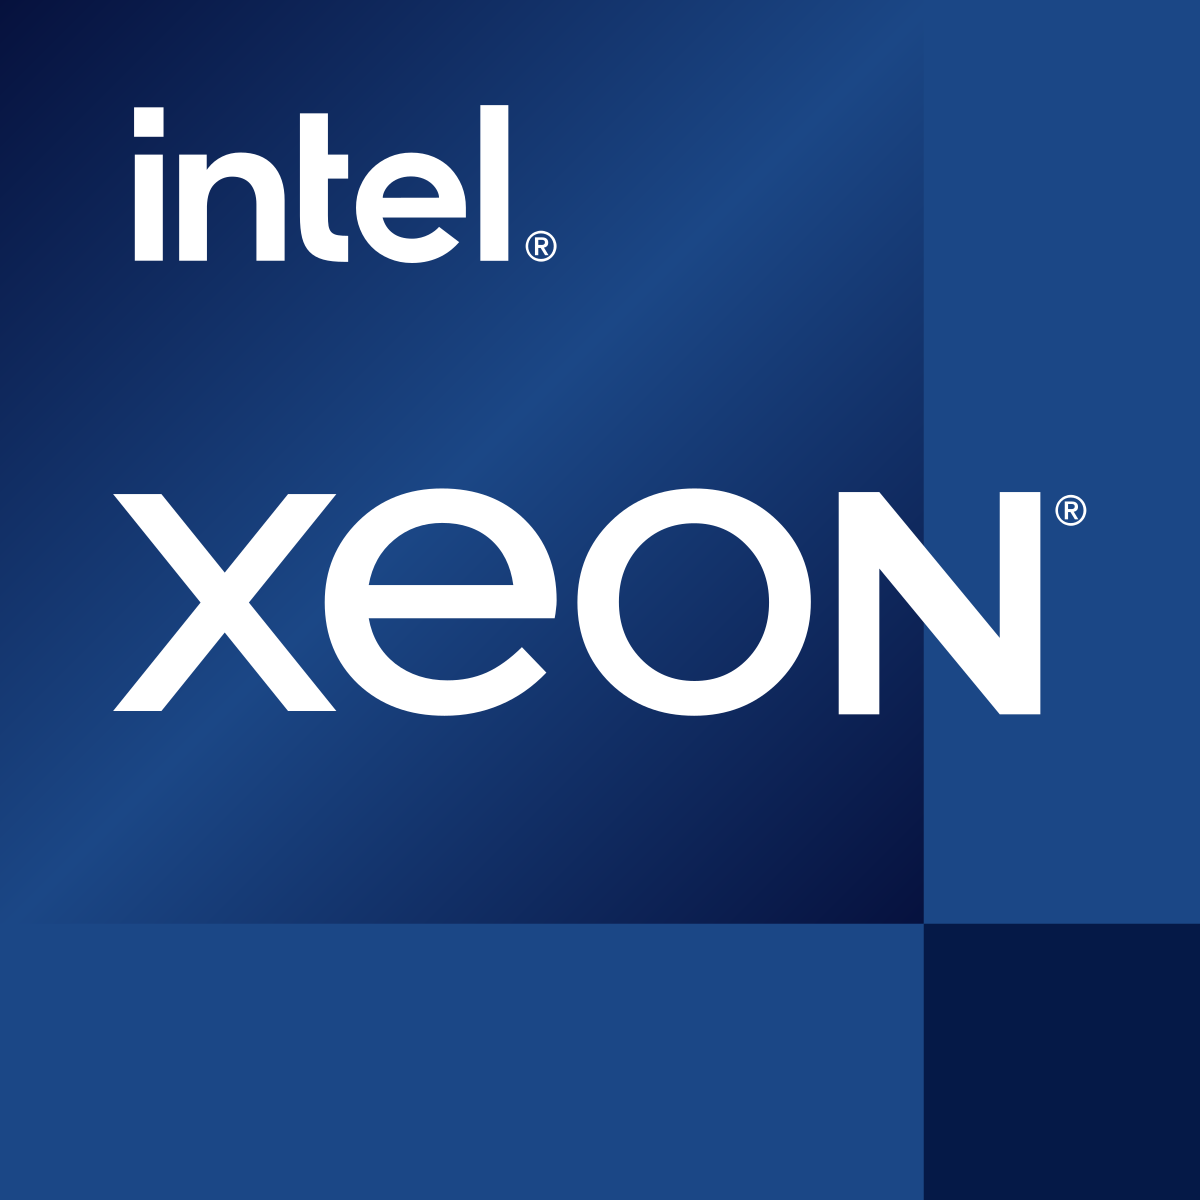 Серверный процессор Intel Xeon E-2356G OEM